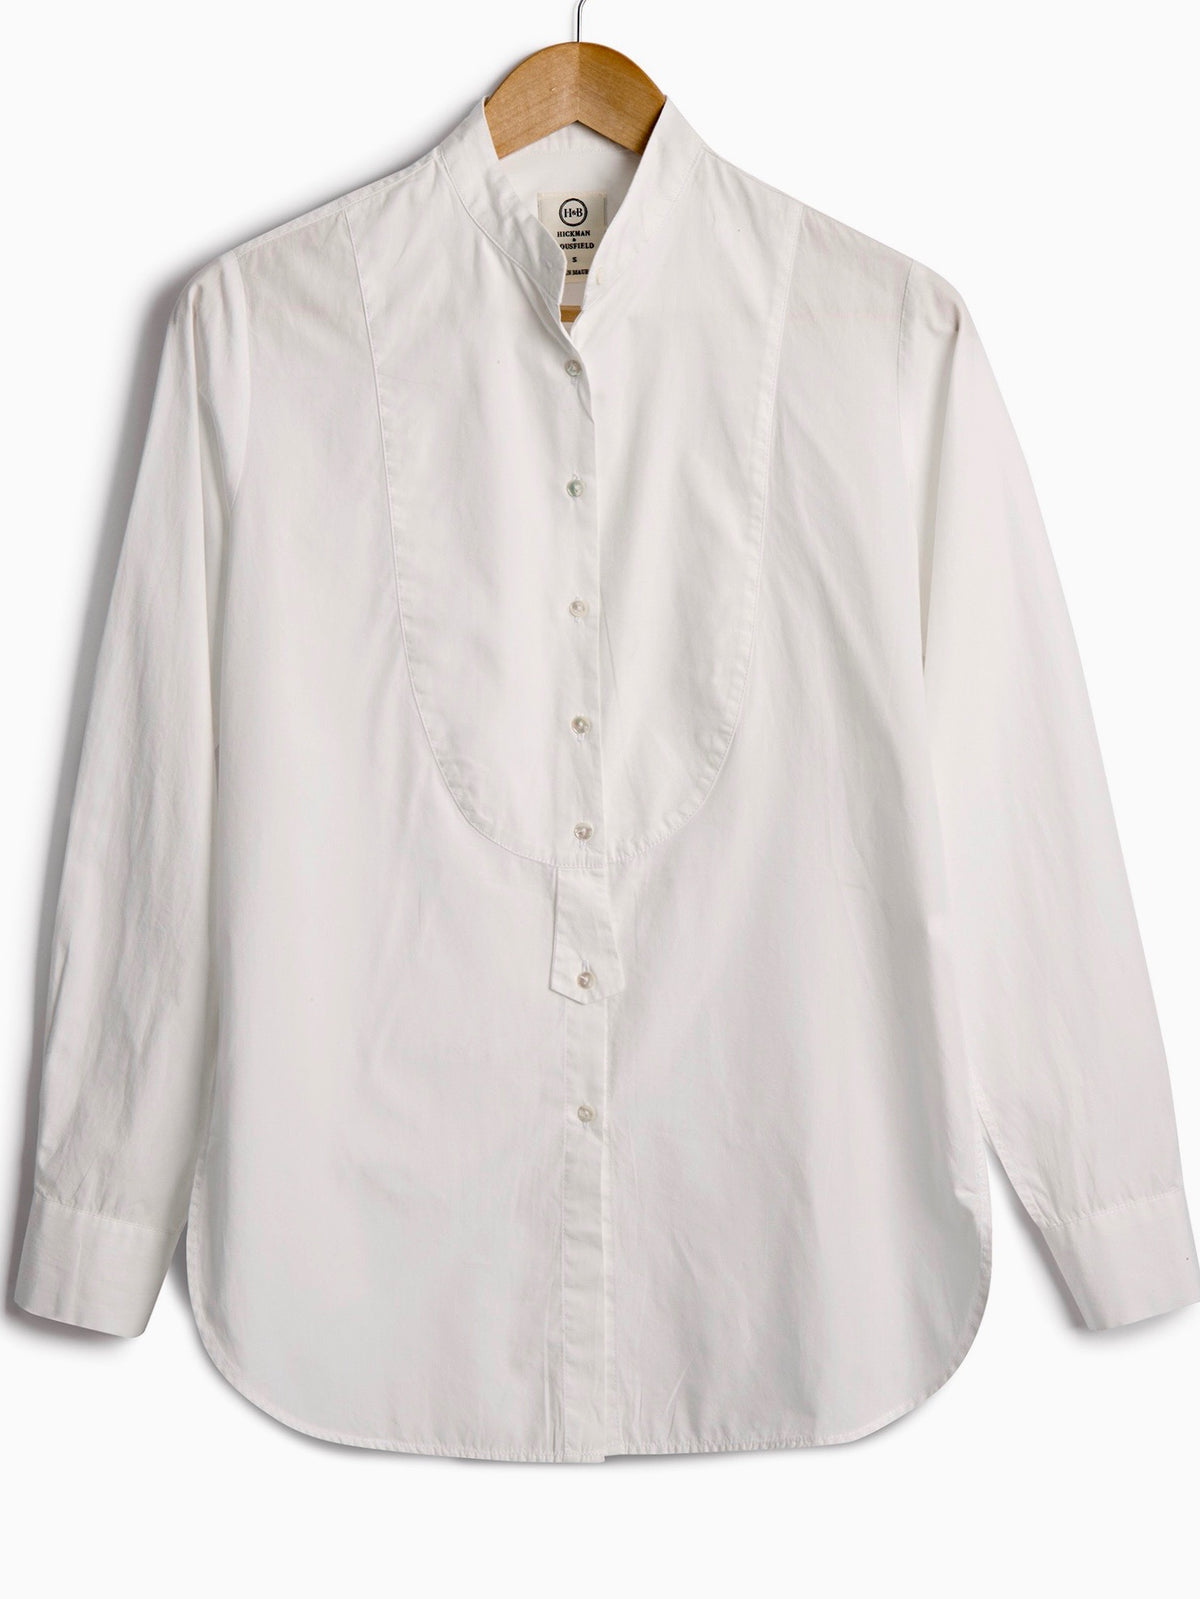 Dress Shirt in White Poplin | Hickman & Bousfield